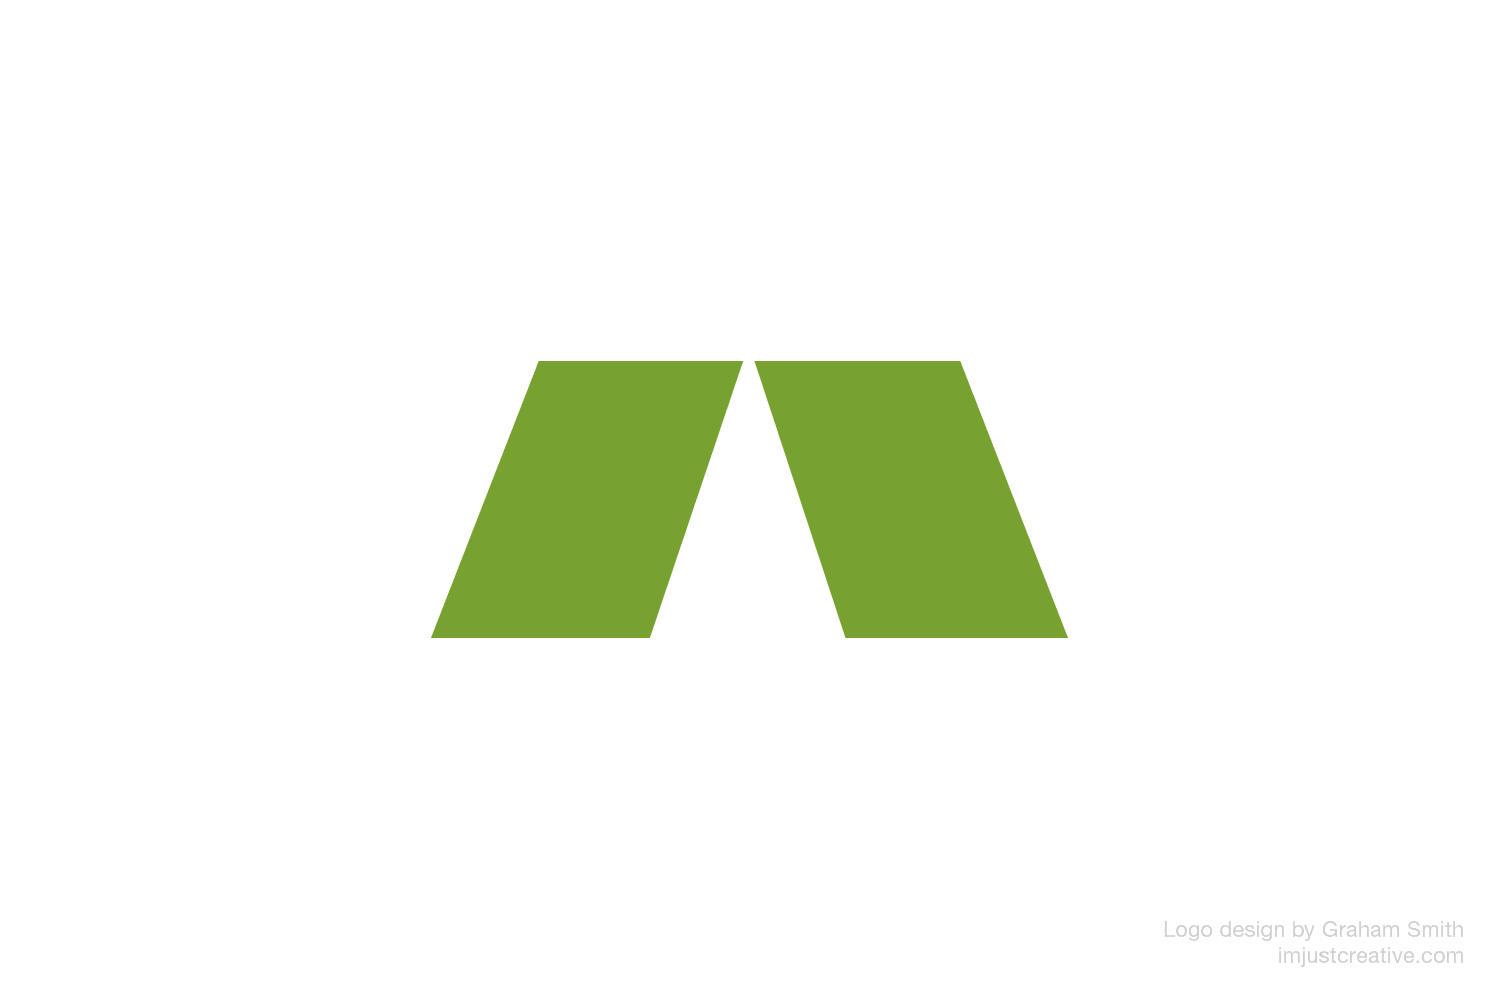 Abacus Insurance logomark design by imjustcreative